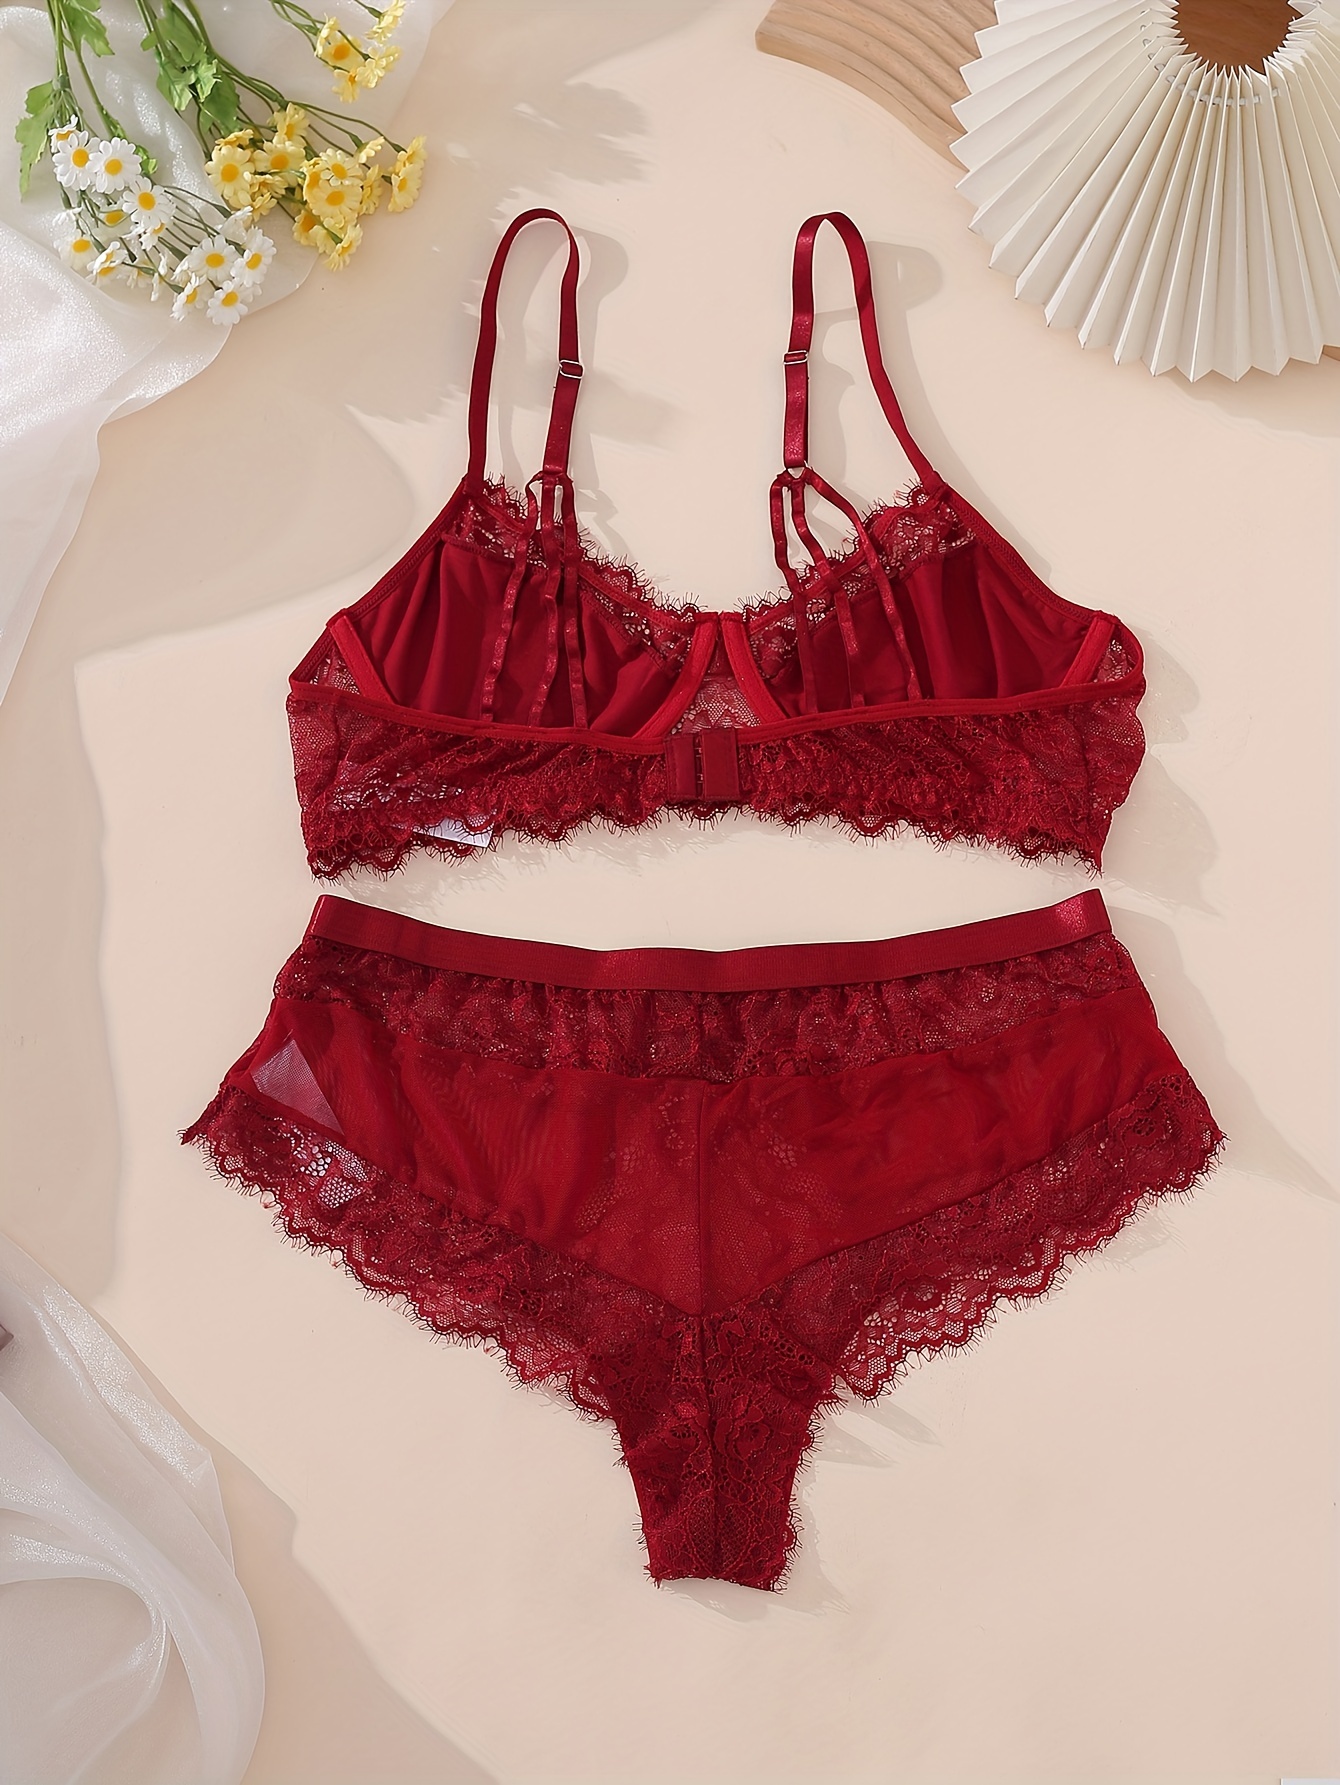 Sexy Red Plus Size Bra & Panty Sets (Women's)